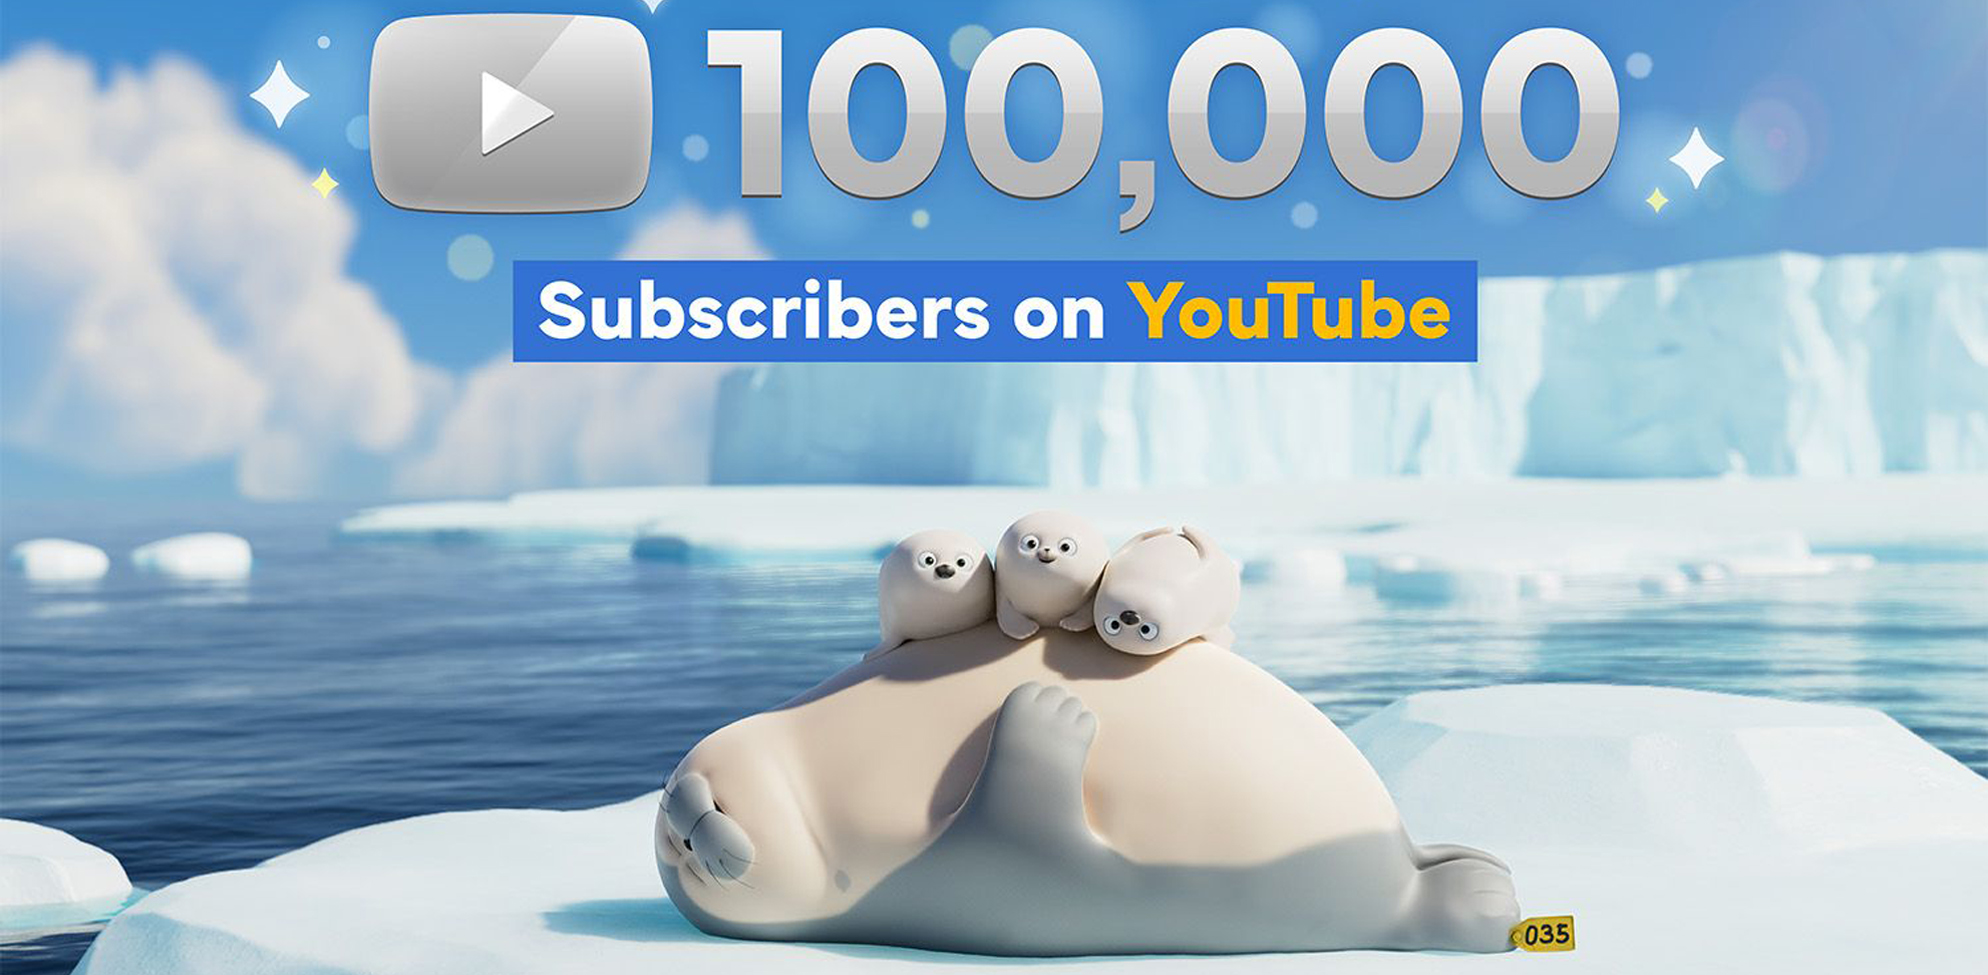 SEALOOK Swim to 100,000 Subscribers on YouTube image